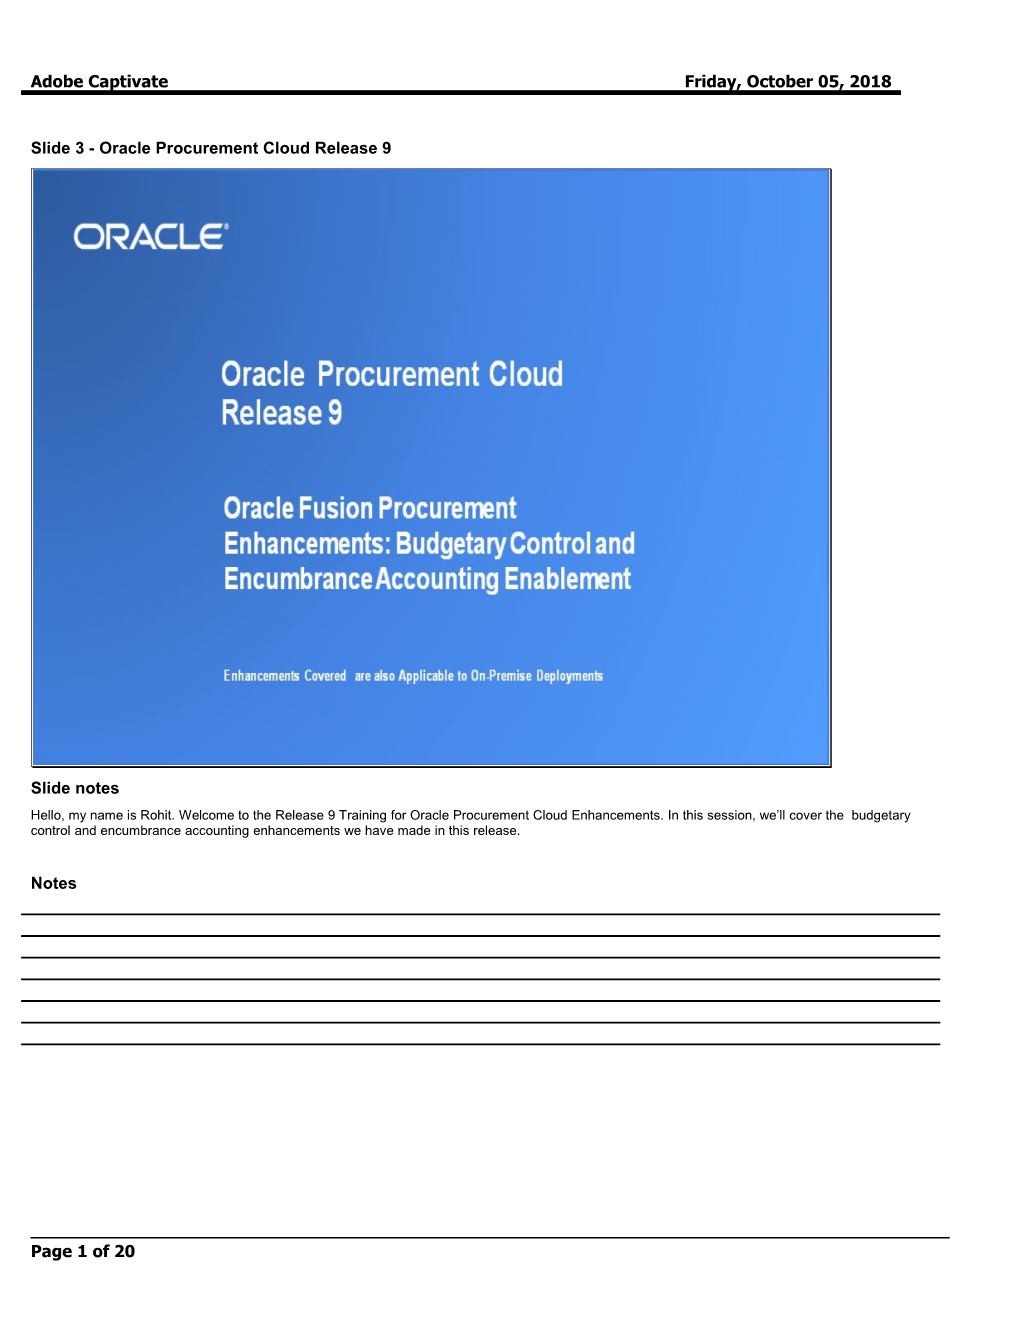 Slide 3 - Oracle Procurement Cloud Release 9